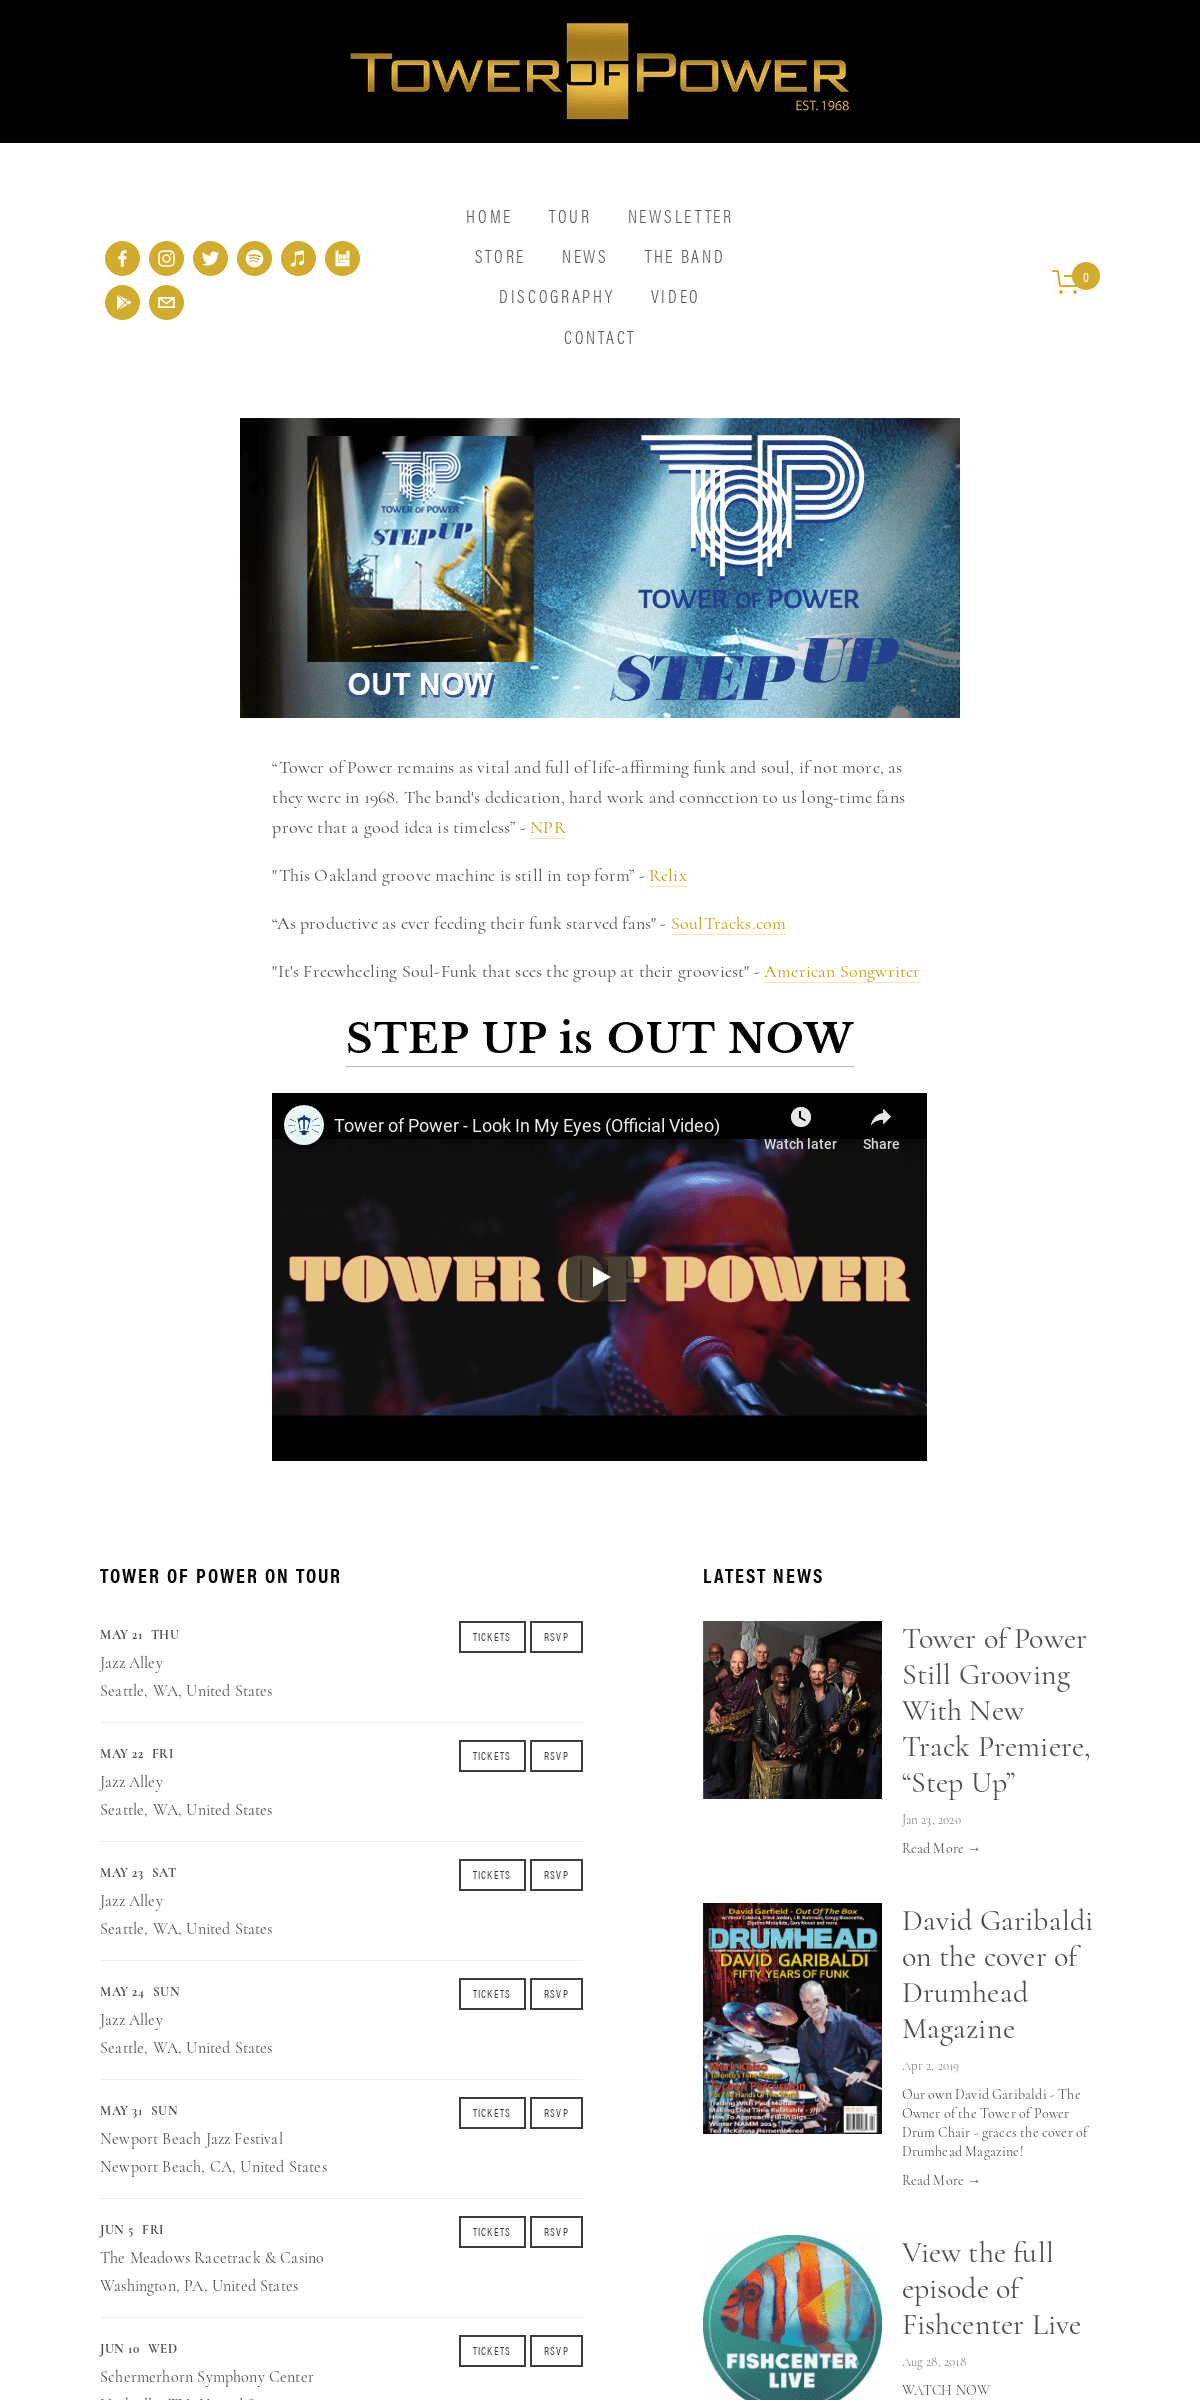 A complete backup of towerofpower.com